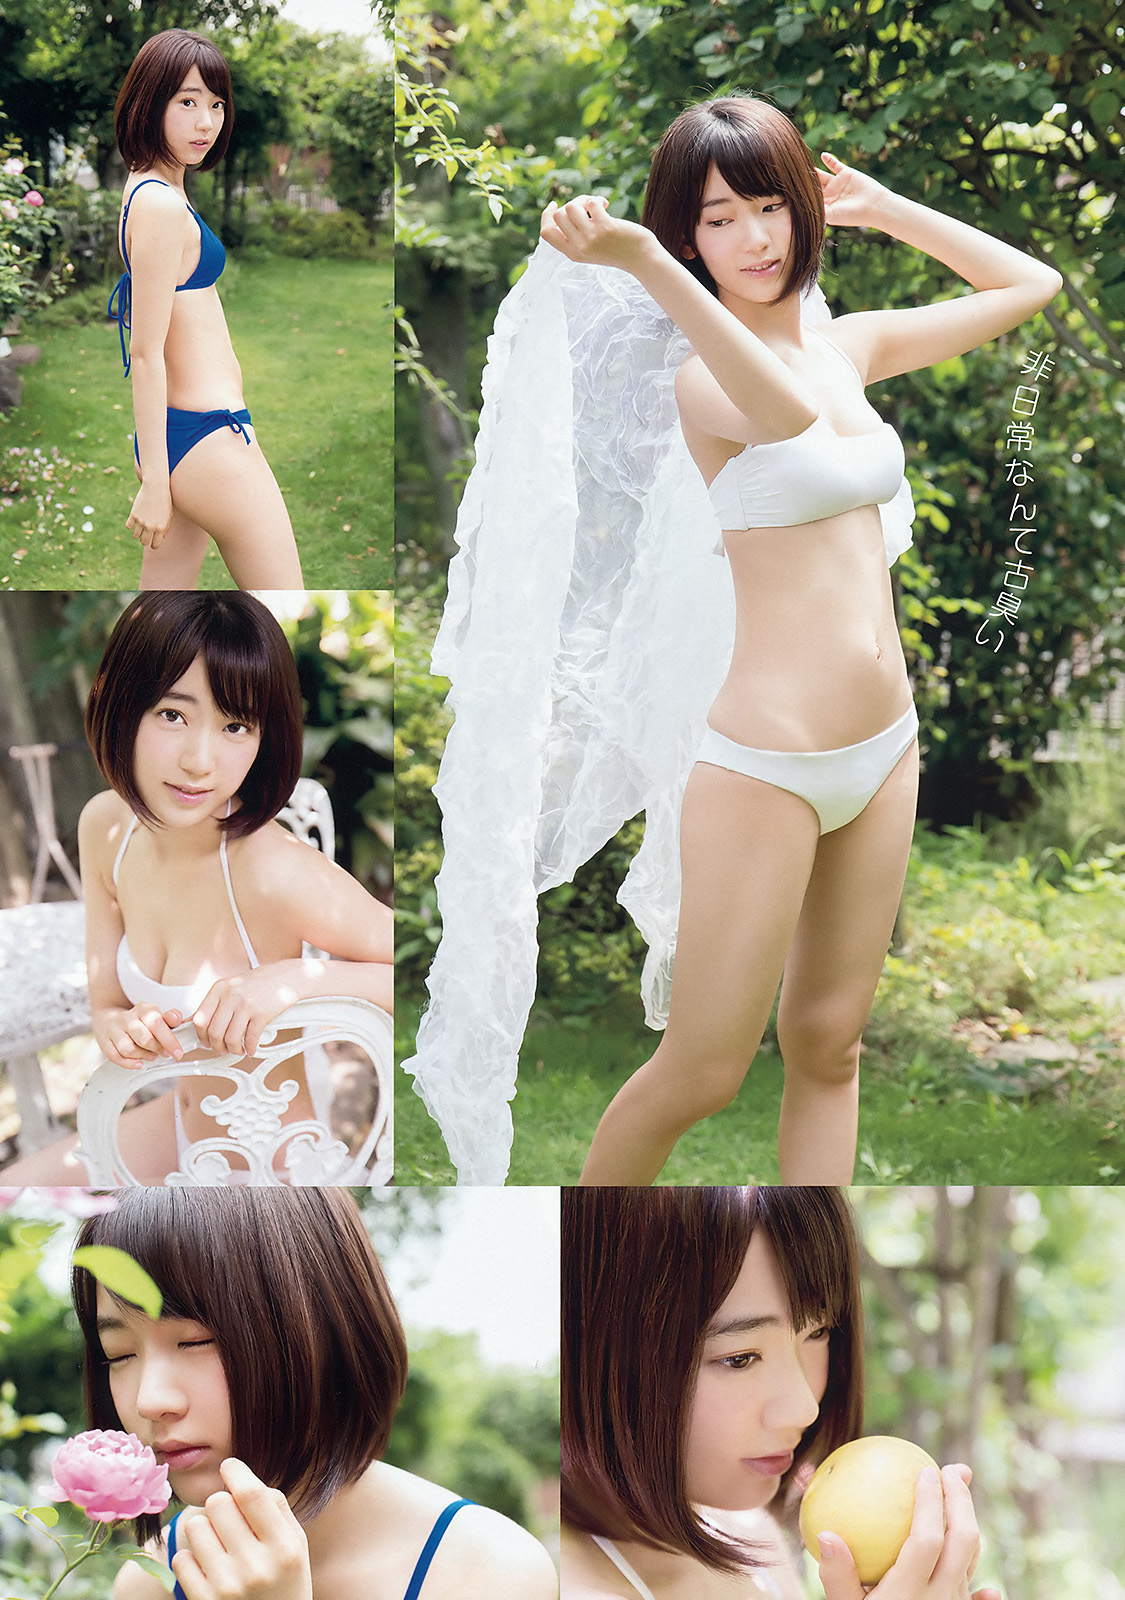 Nao Kanzaki and a few friends: Sakura Miyawaki: 2015 magazine scans #4